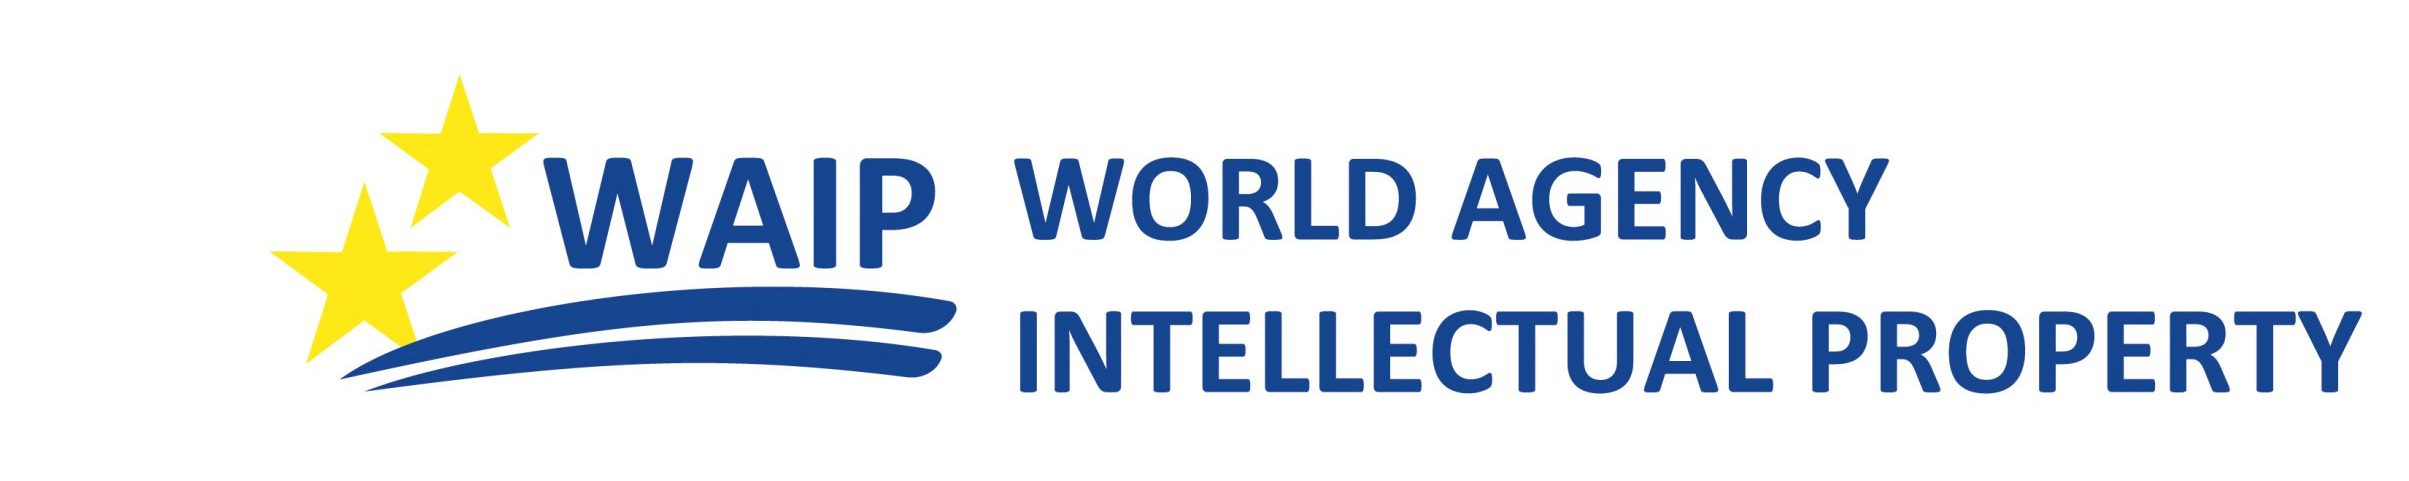 WAIP-World Agency Intellectual Property